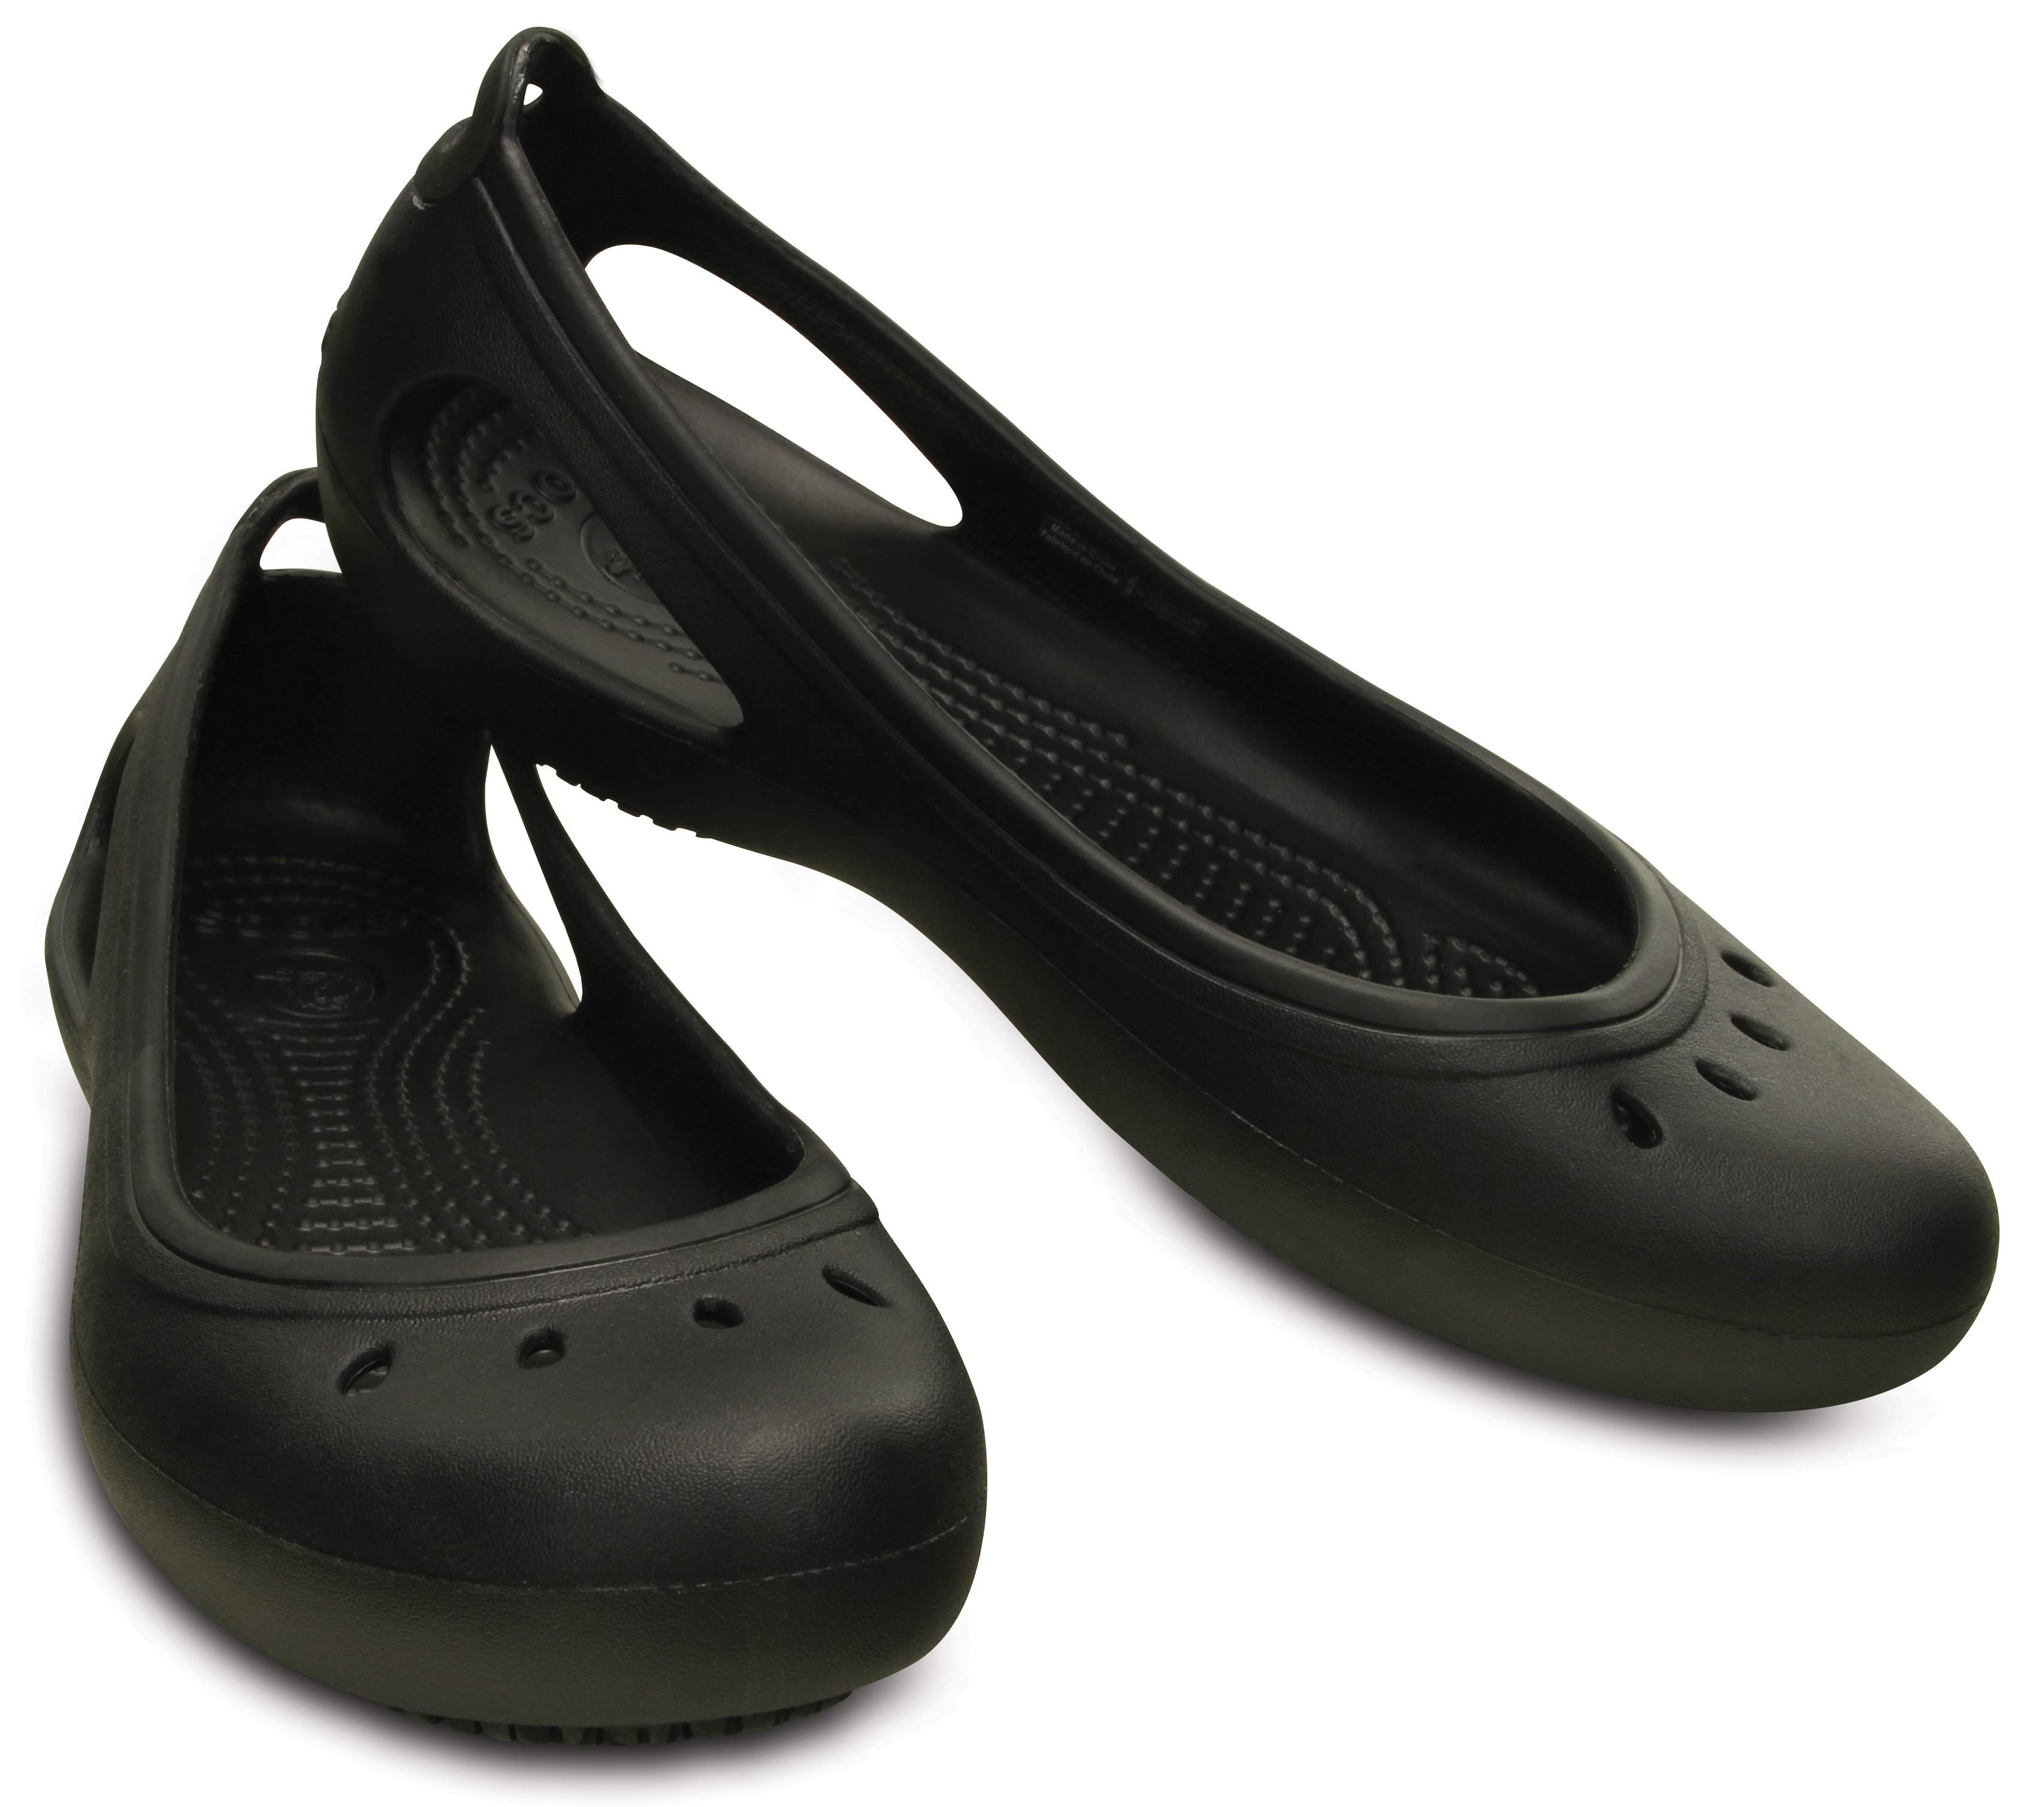 crocs women's shoes kadee flats